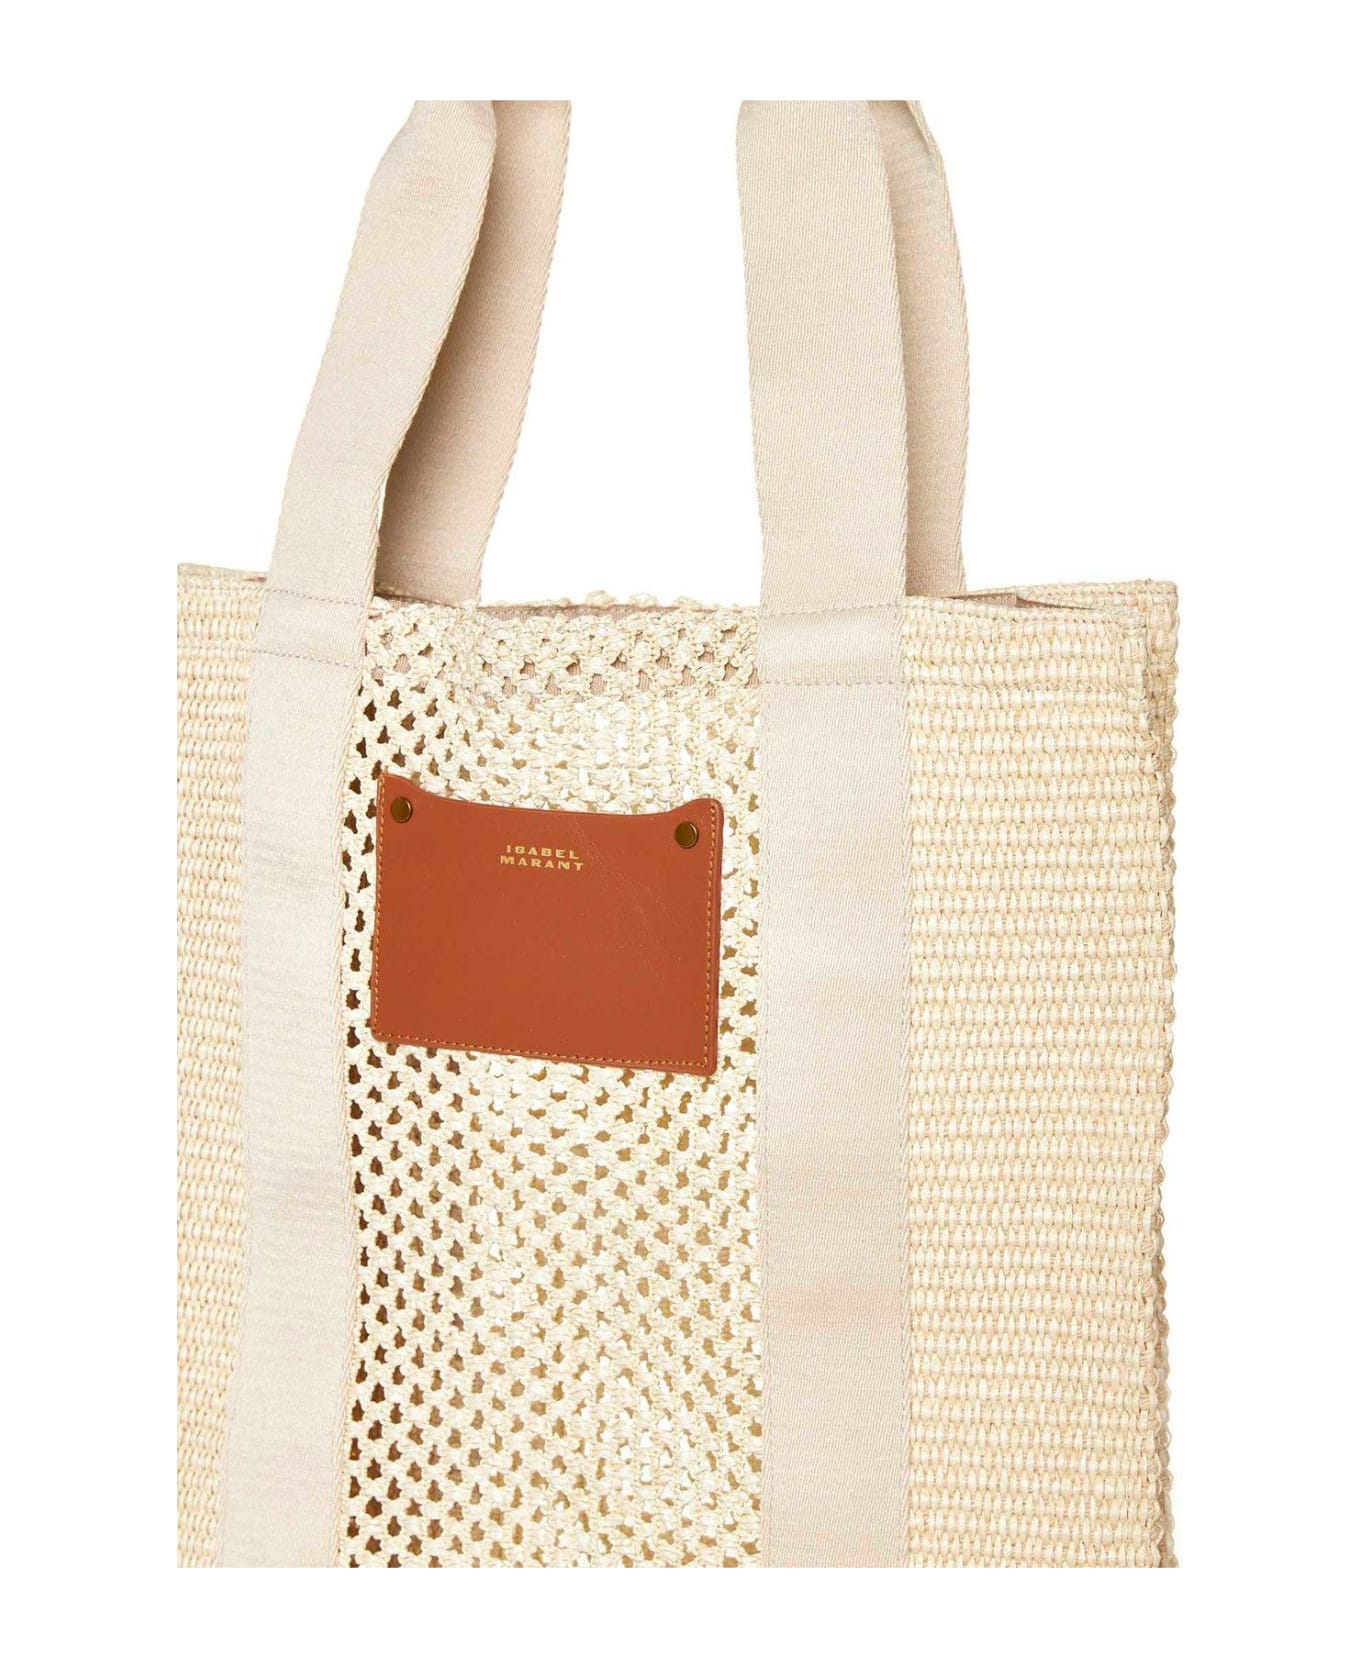 Isabel Marant Striped Woven Top Handle Bag - Beige/beige